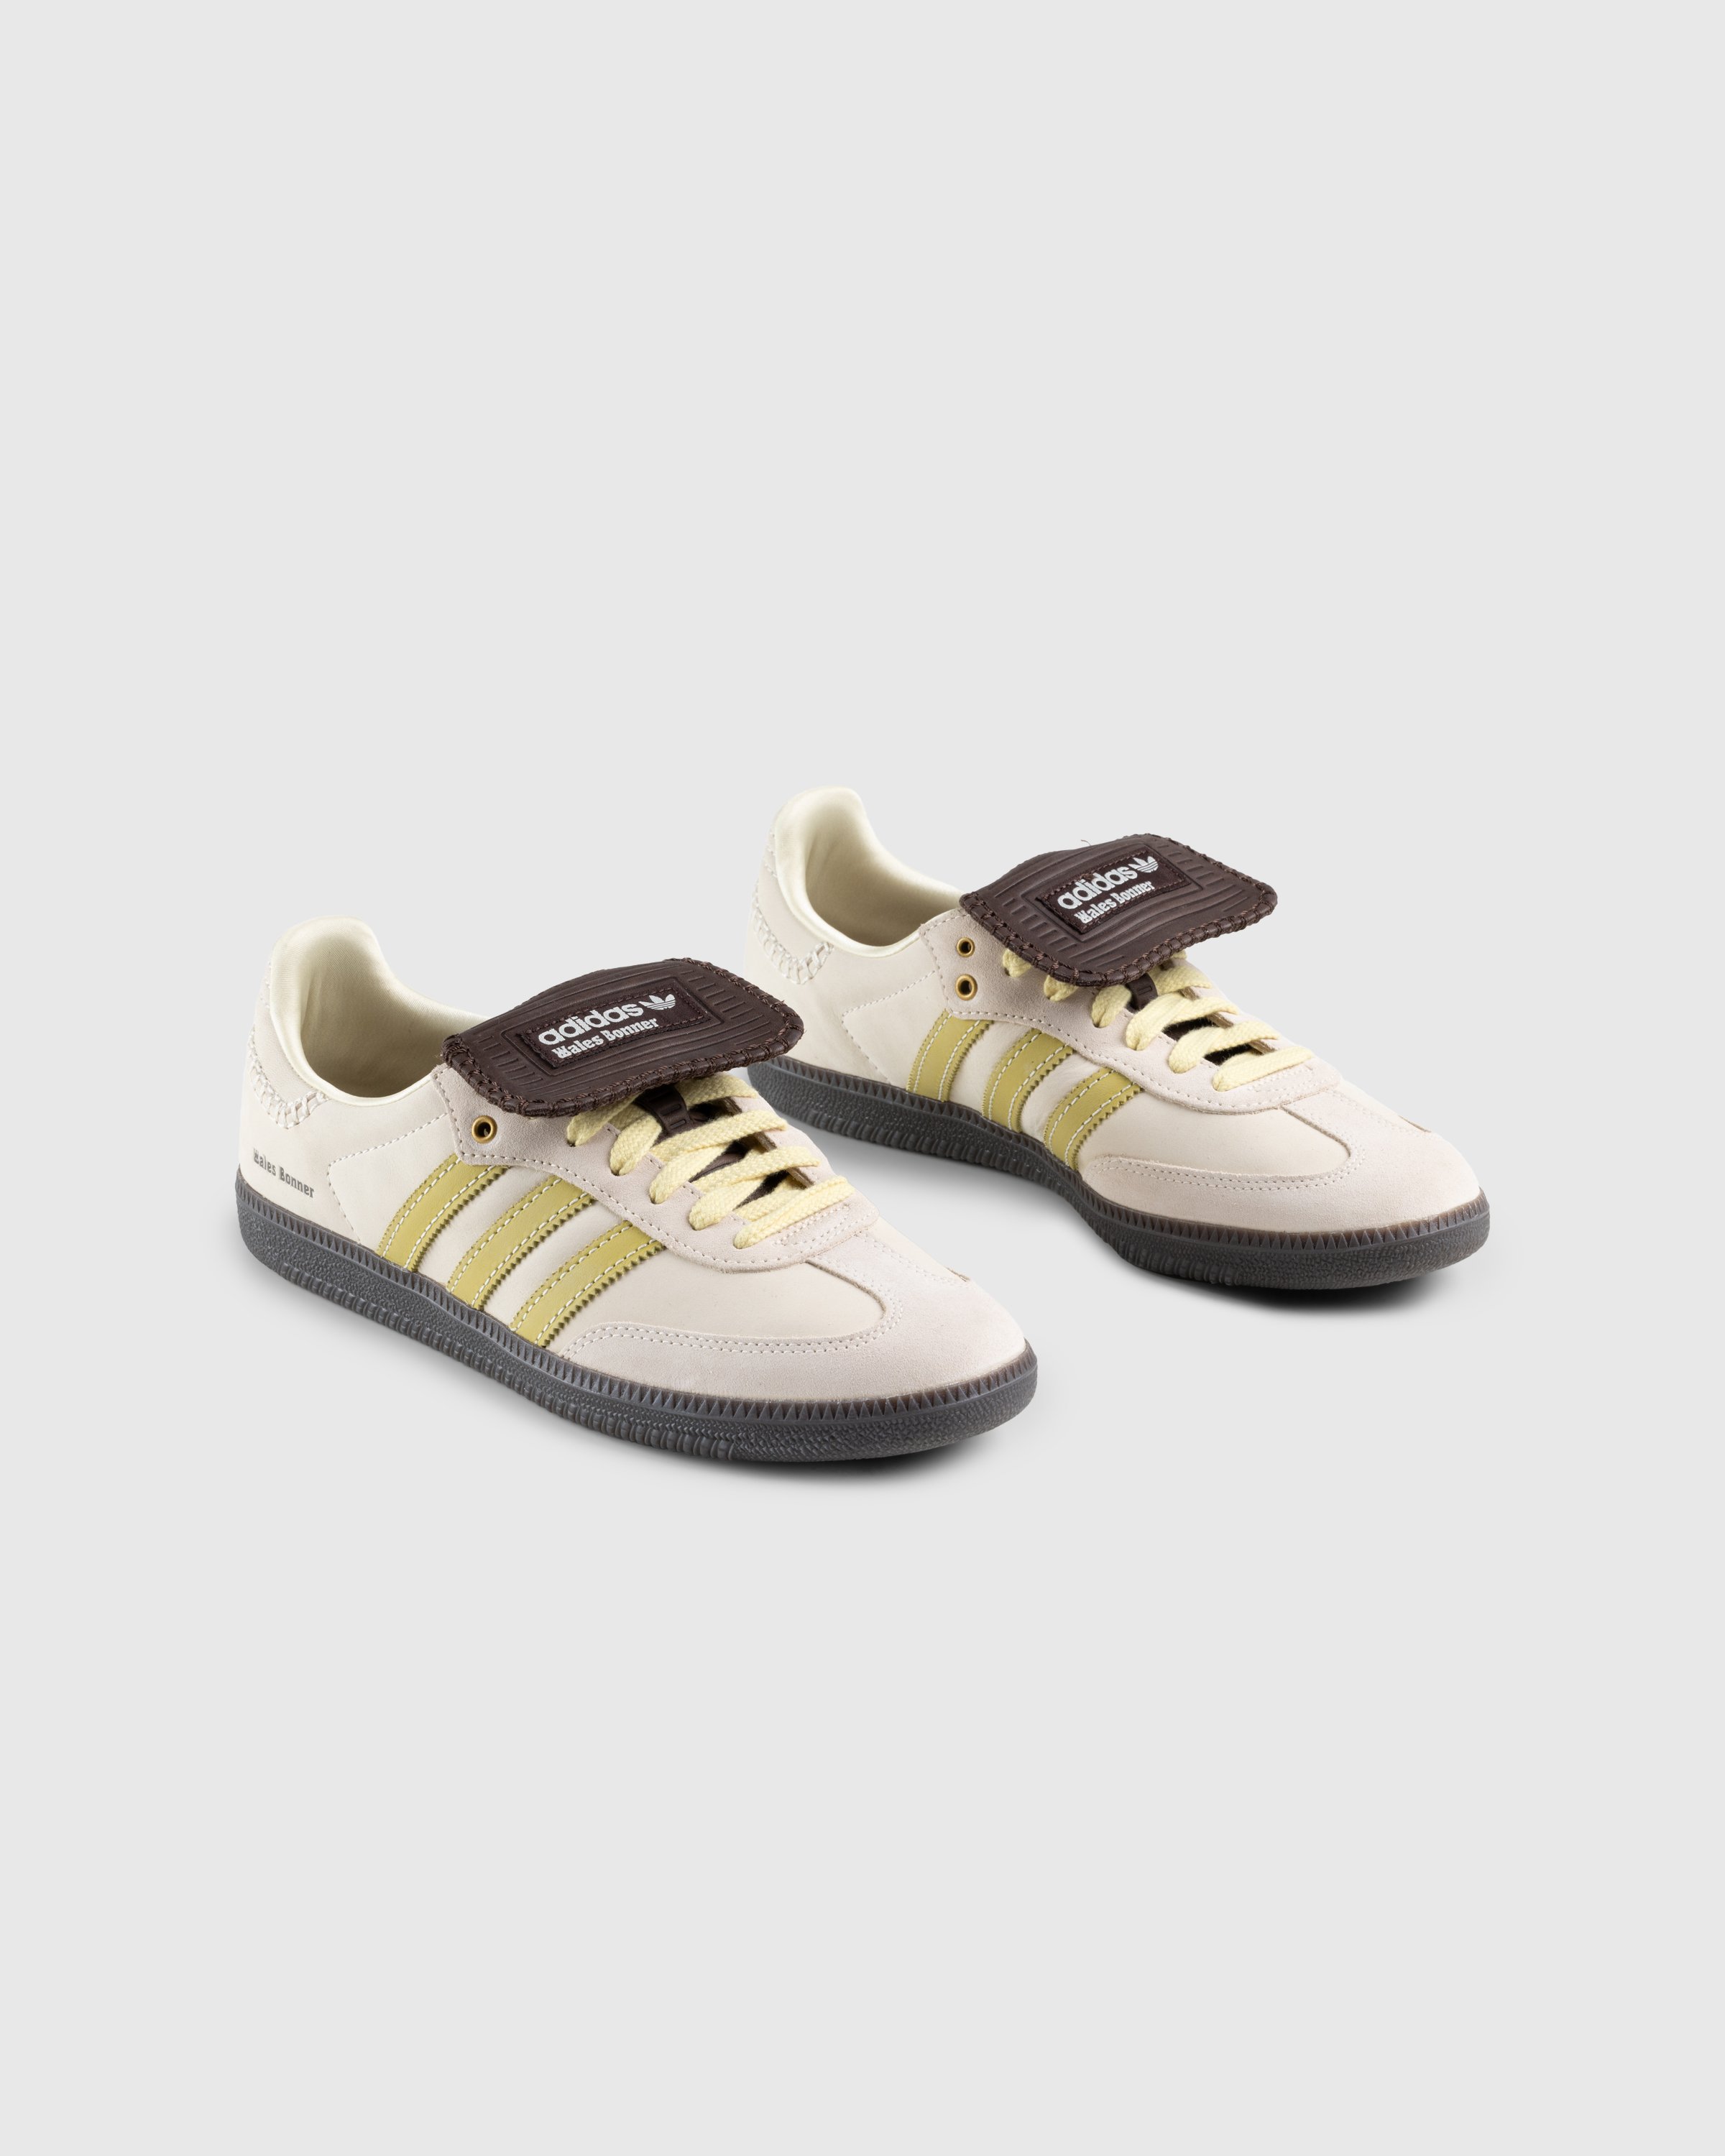 Adidas x Wales Bonner - Samba Nubuck Ecru Tint/Almost Yellow/Dark Brown - Footwear - Beige - Image 3